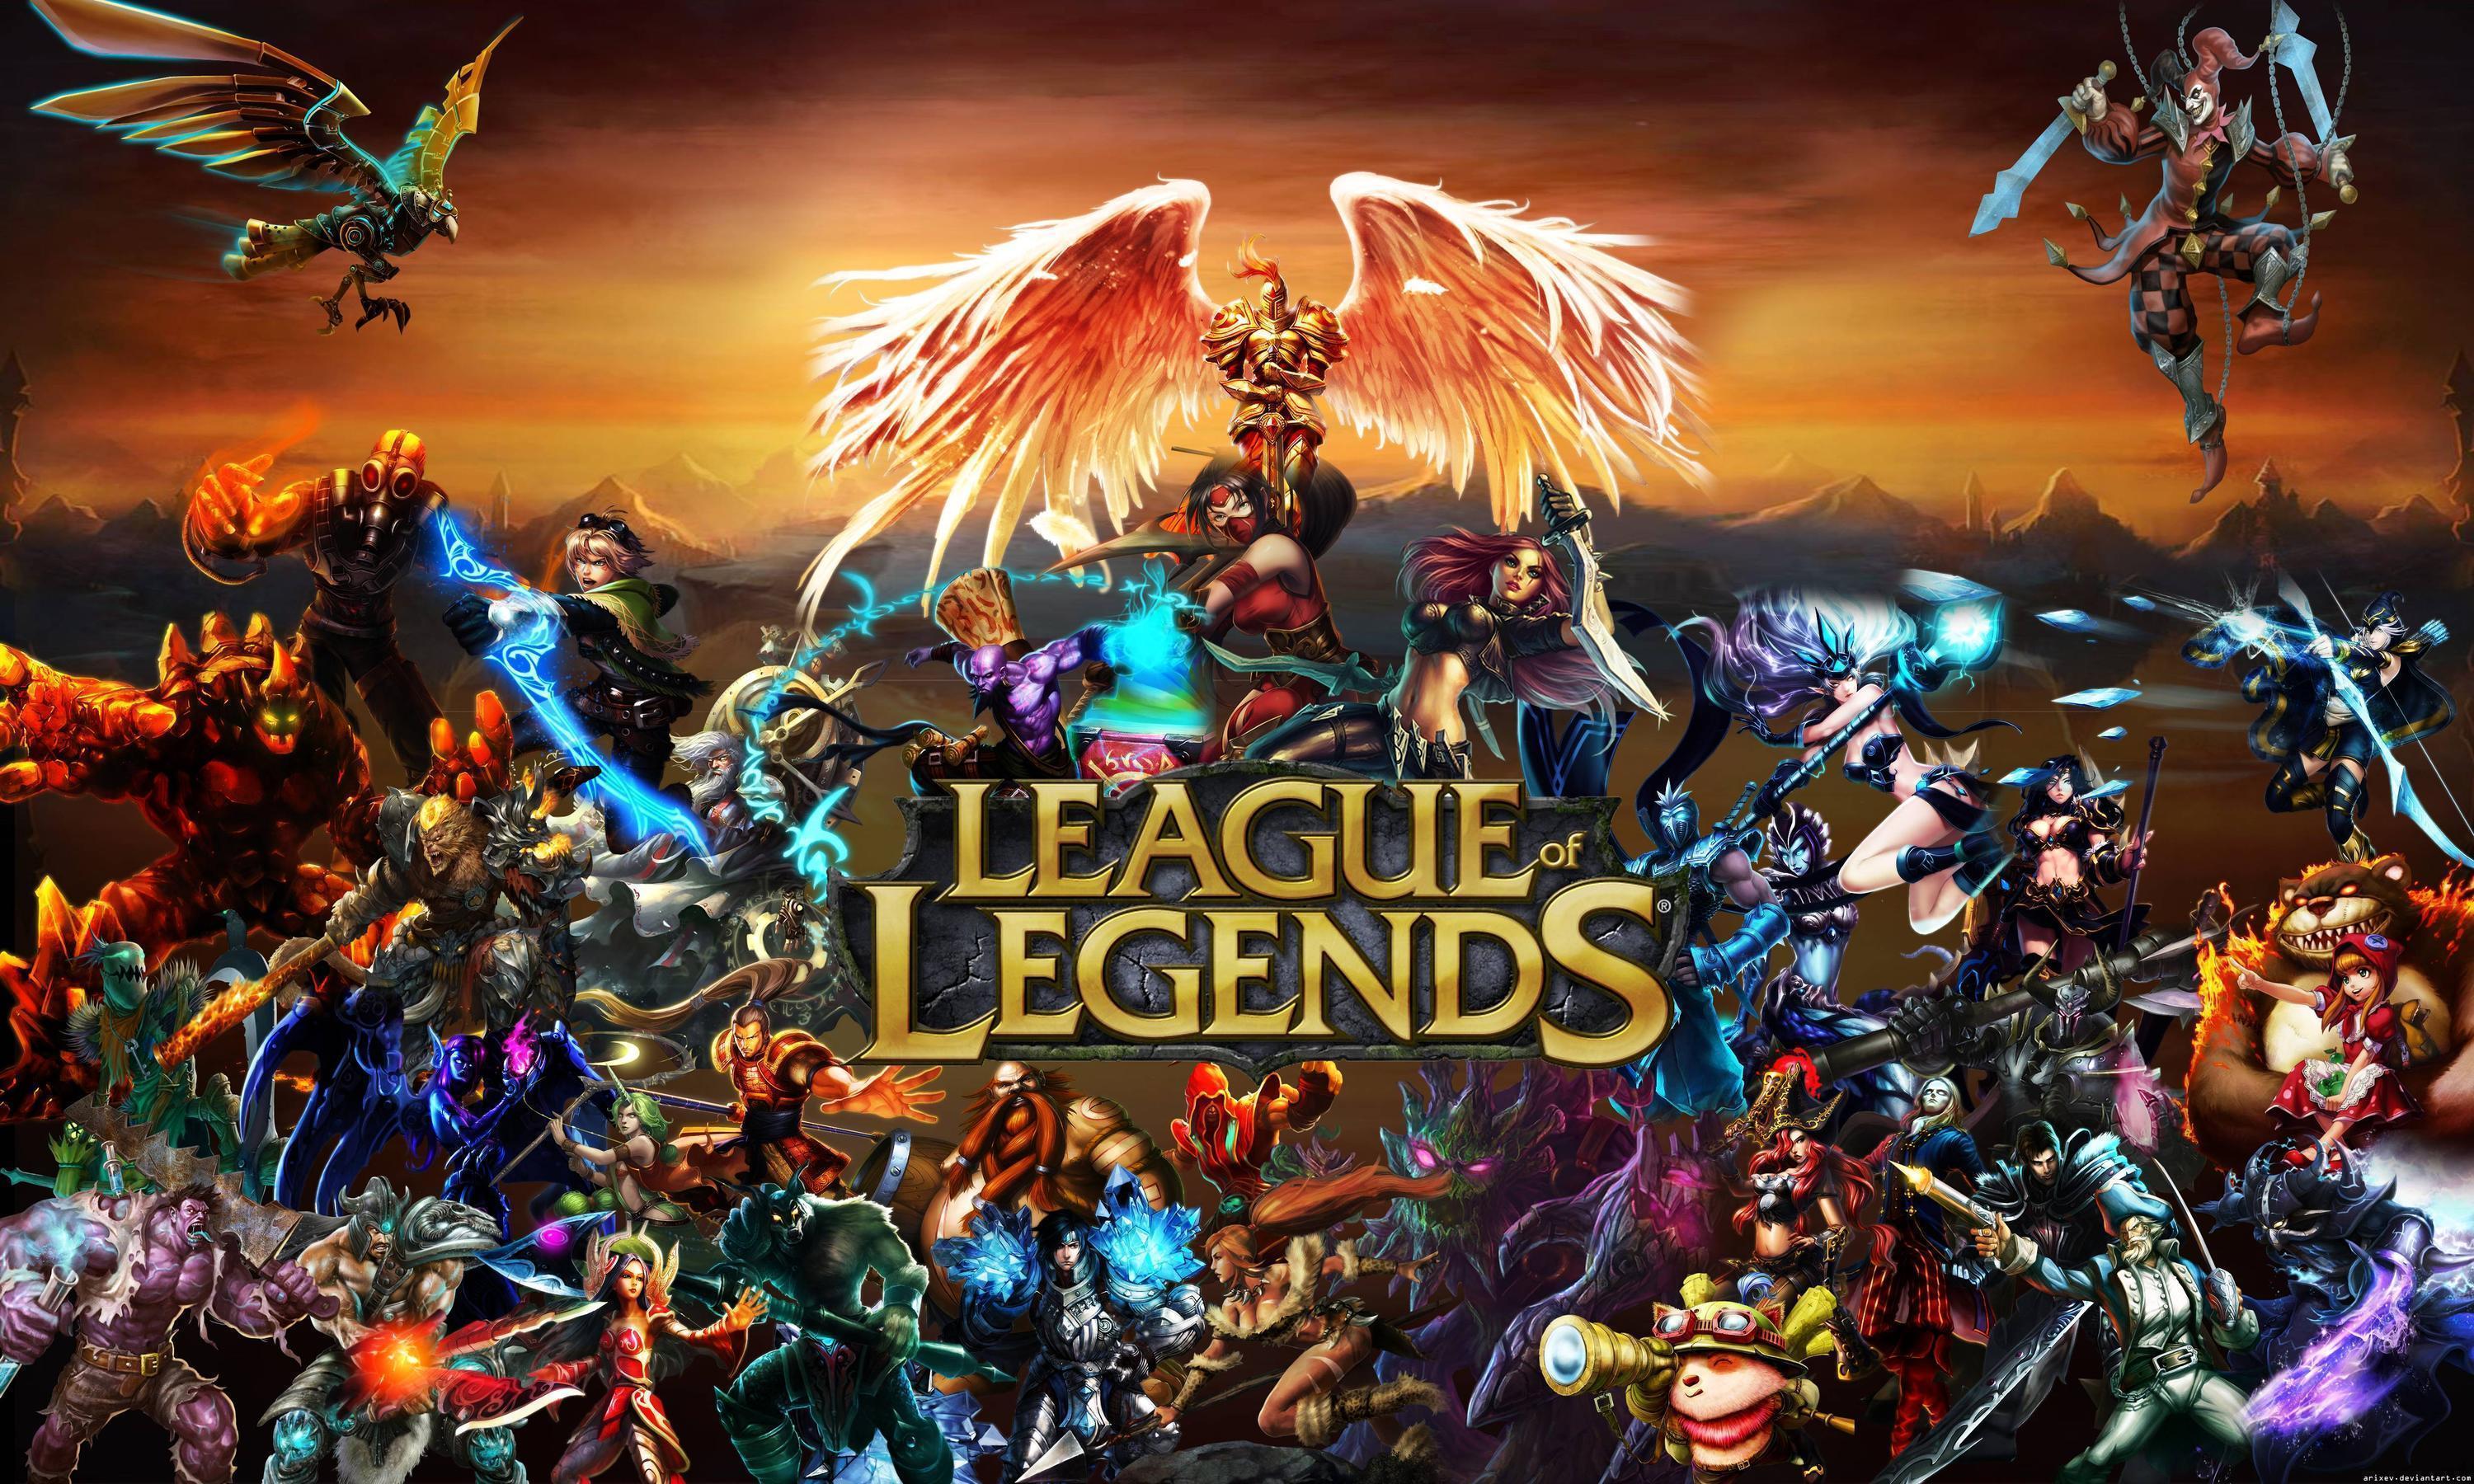 League of Legends PC Wallpapers - Top